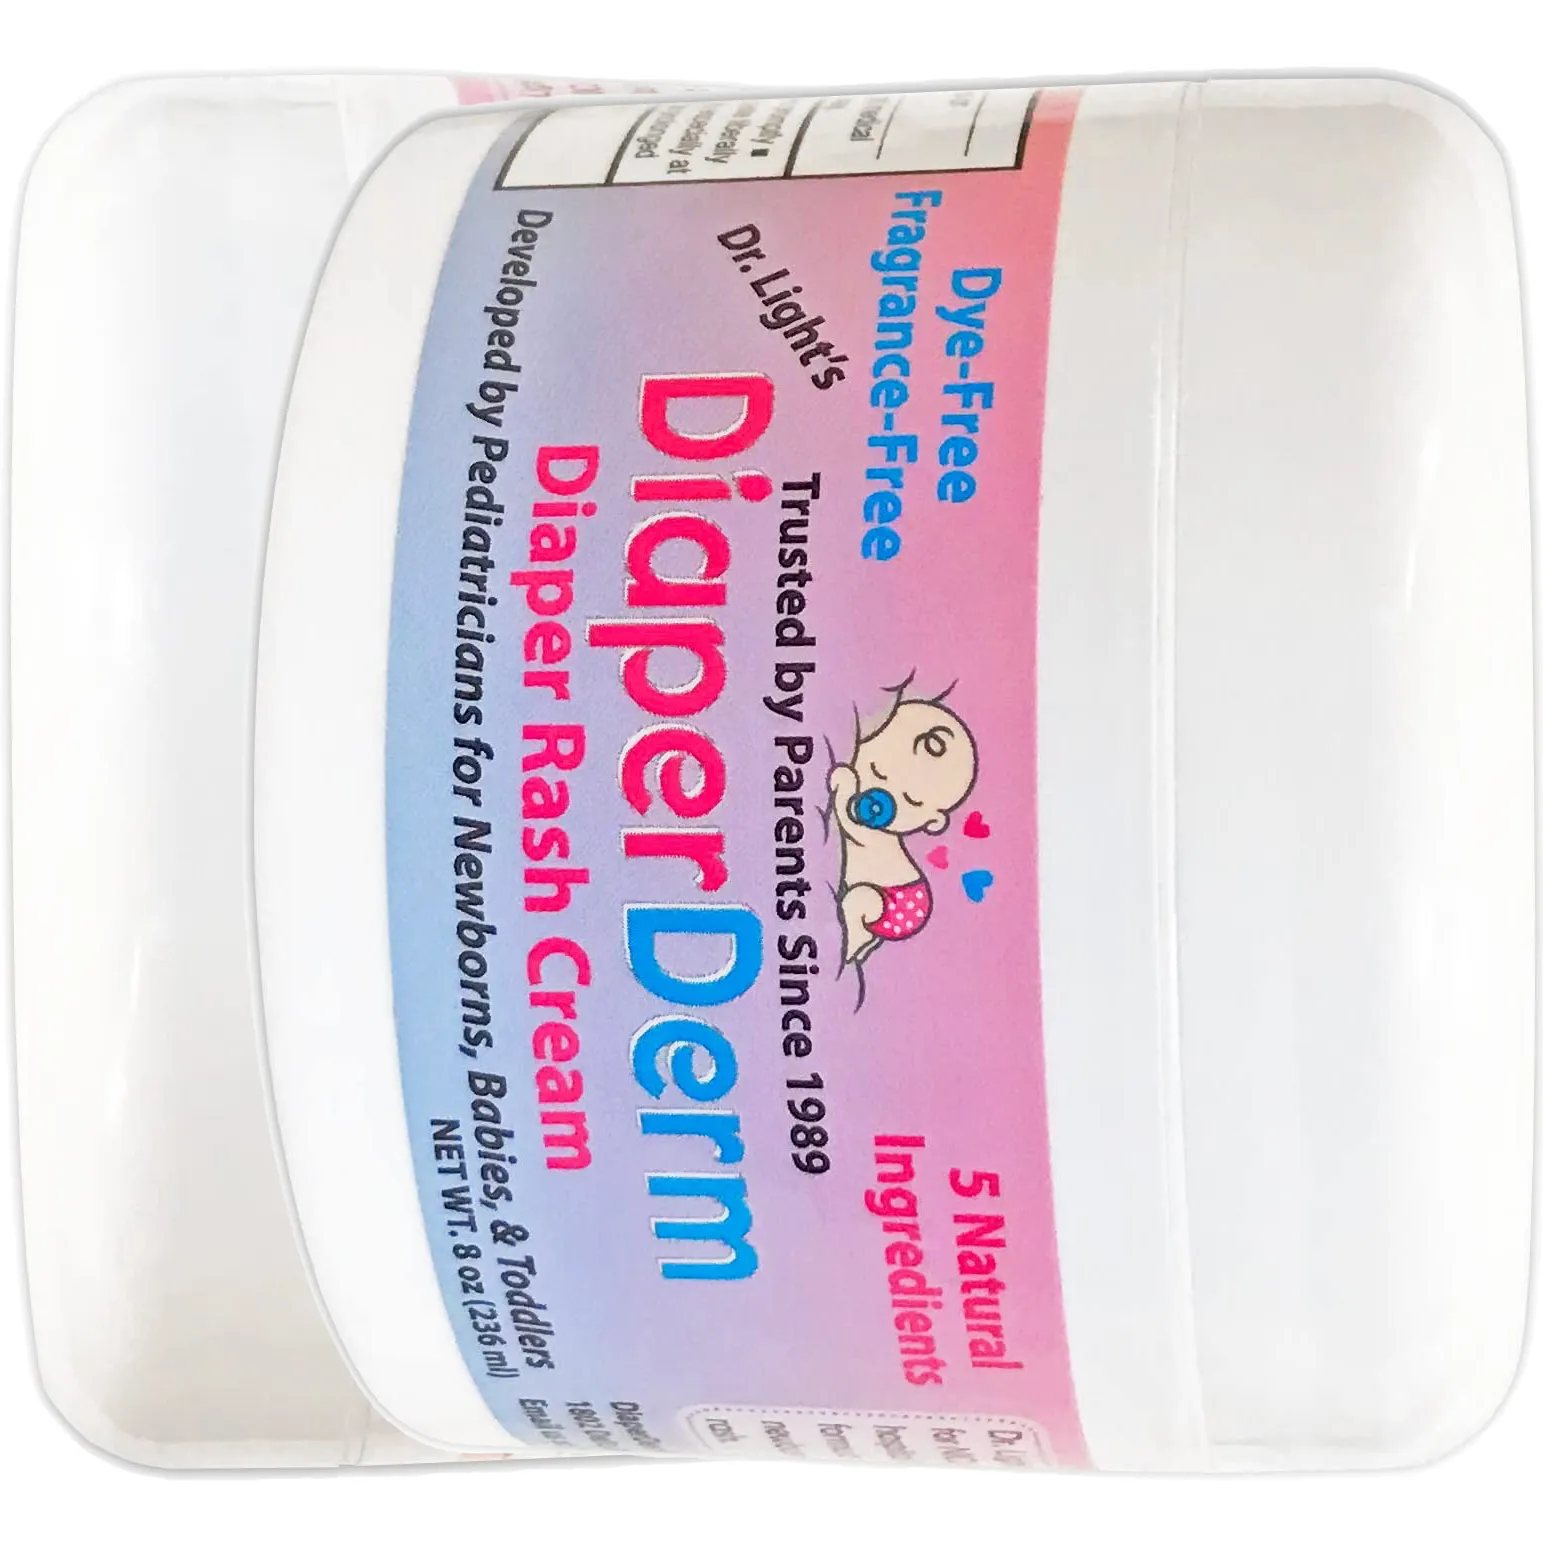 Free Diaperderm Diaper Rash Cream